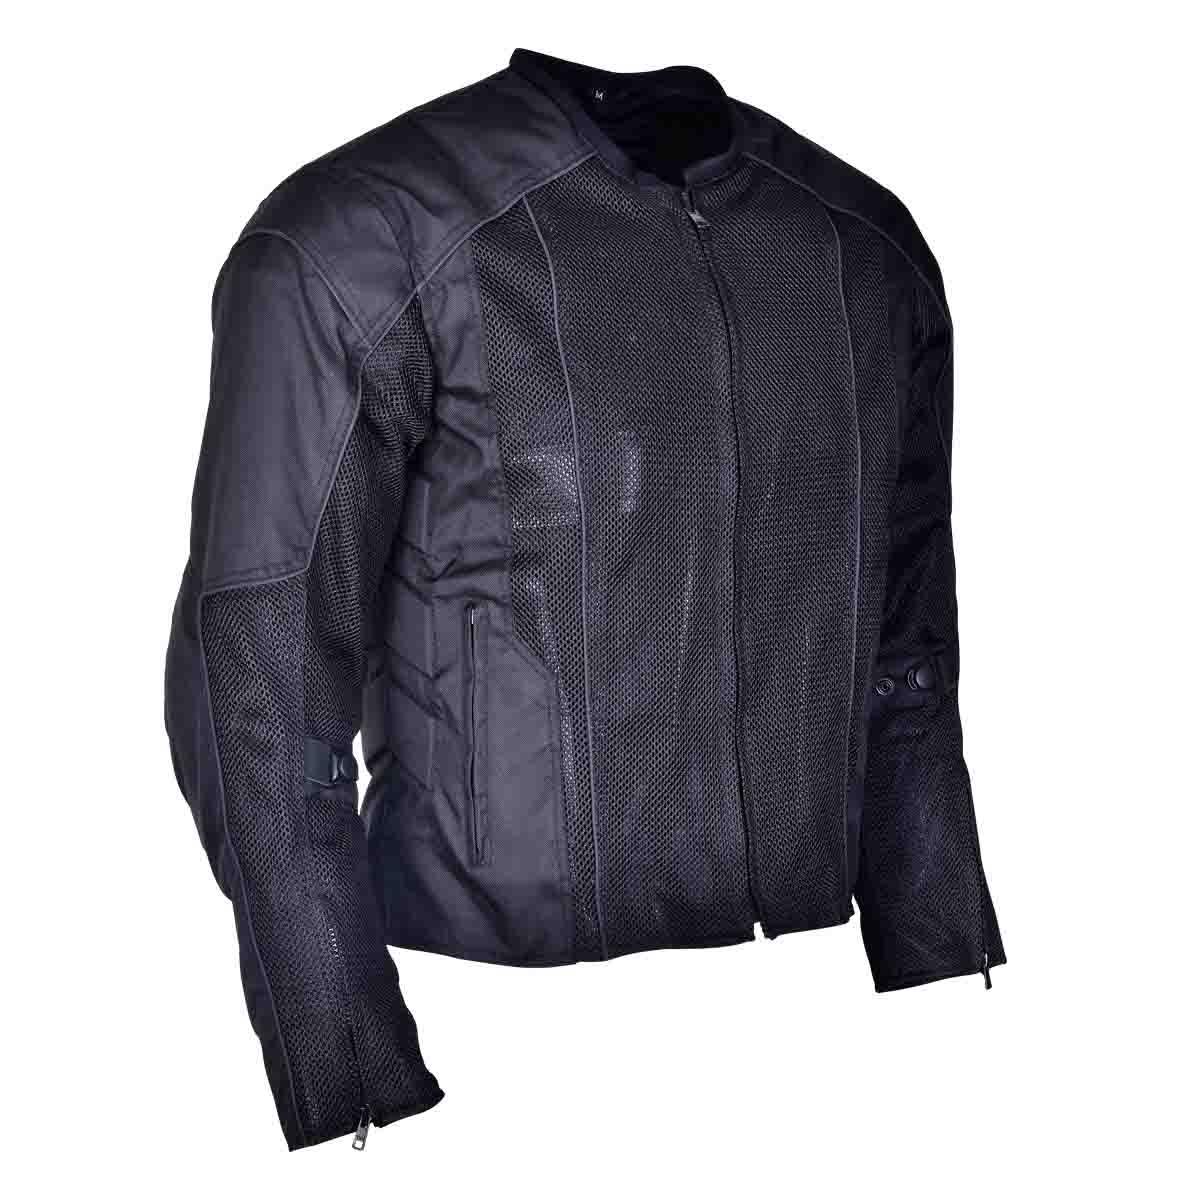 Advanced 3-Season Mesh/Textile CE Armor Motorcycle Jacket